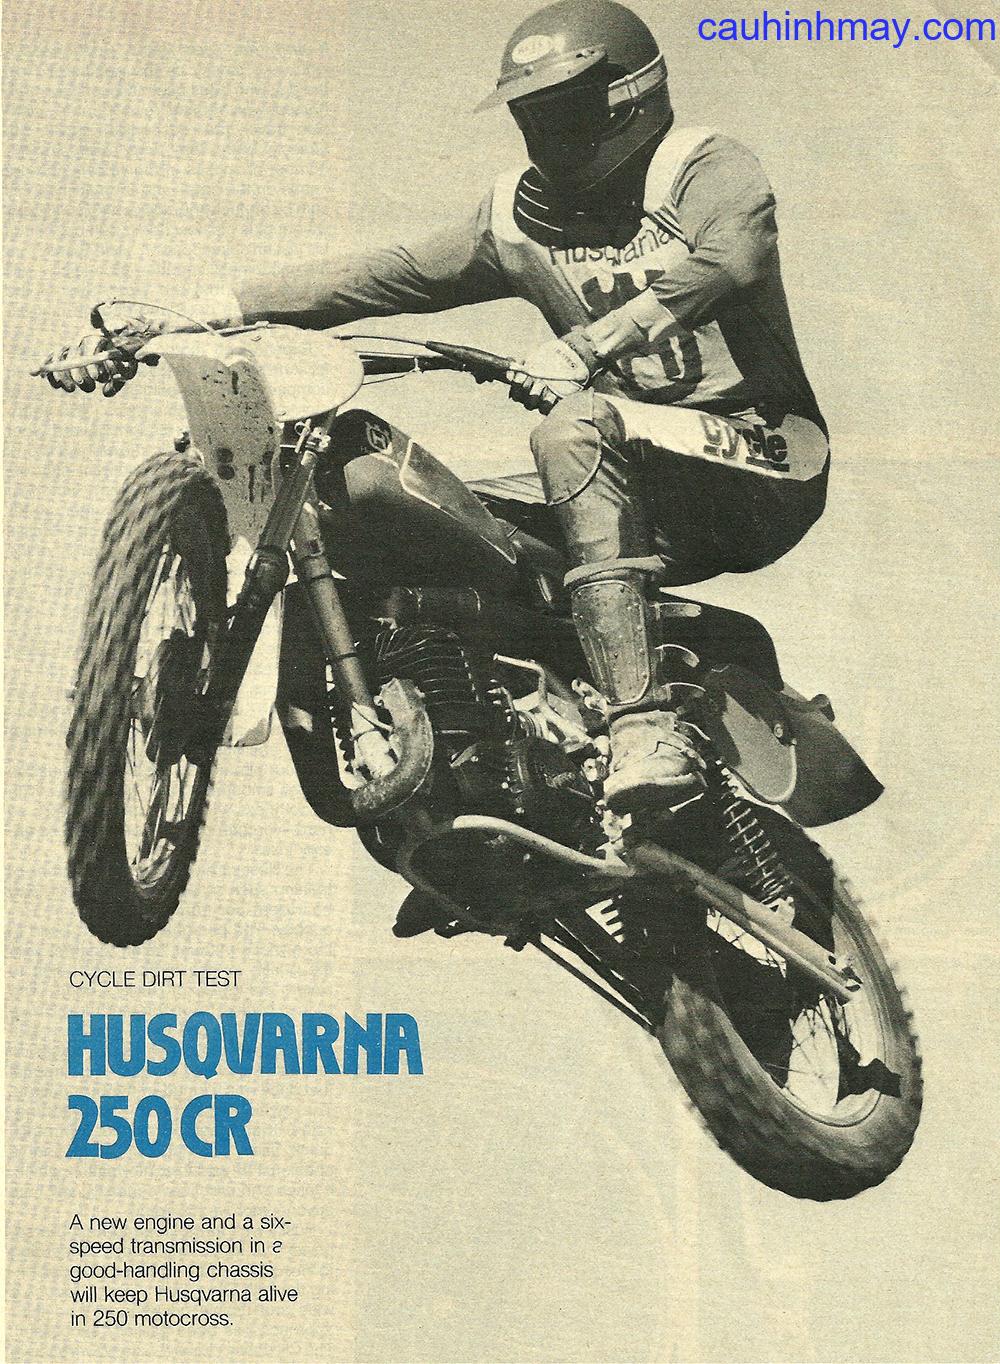 1978 HUSQVARNA 250CR - cauhinhmay.com